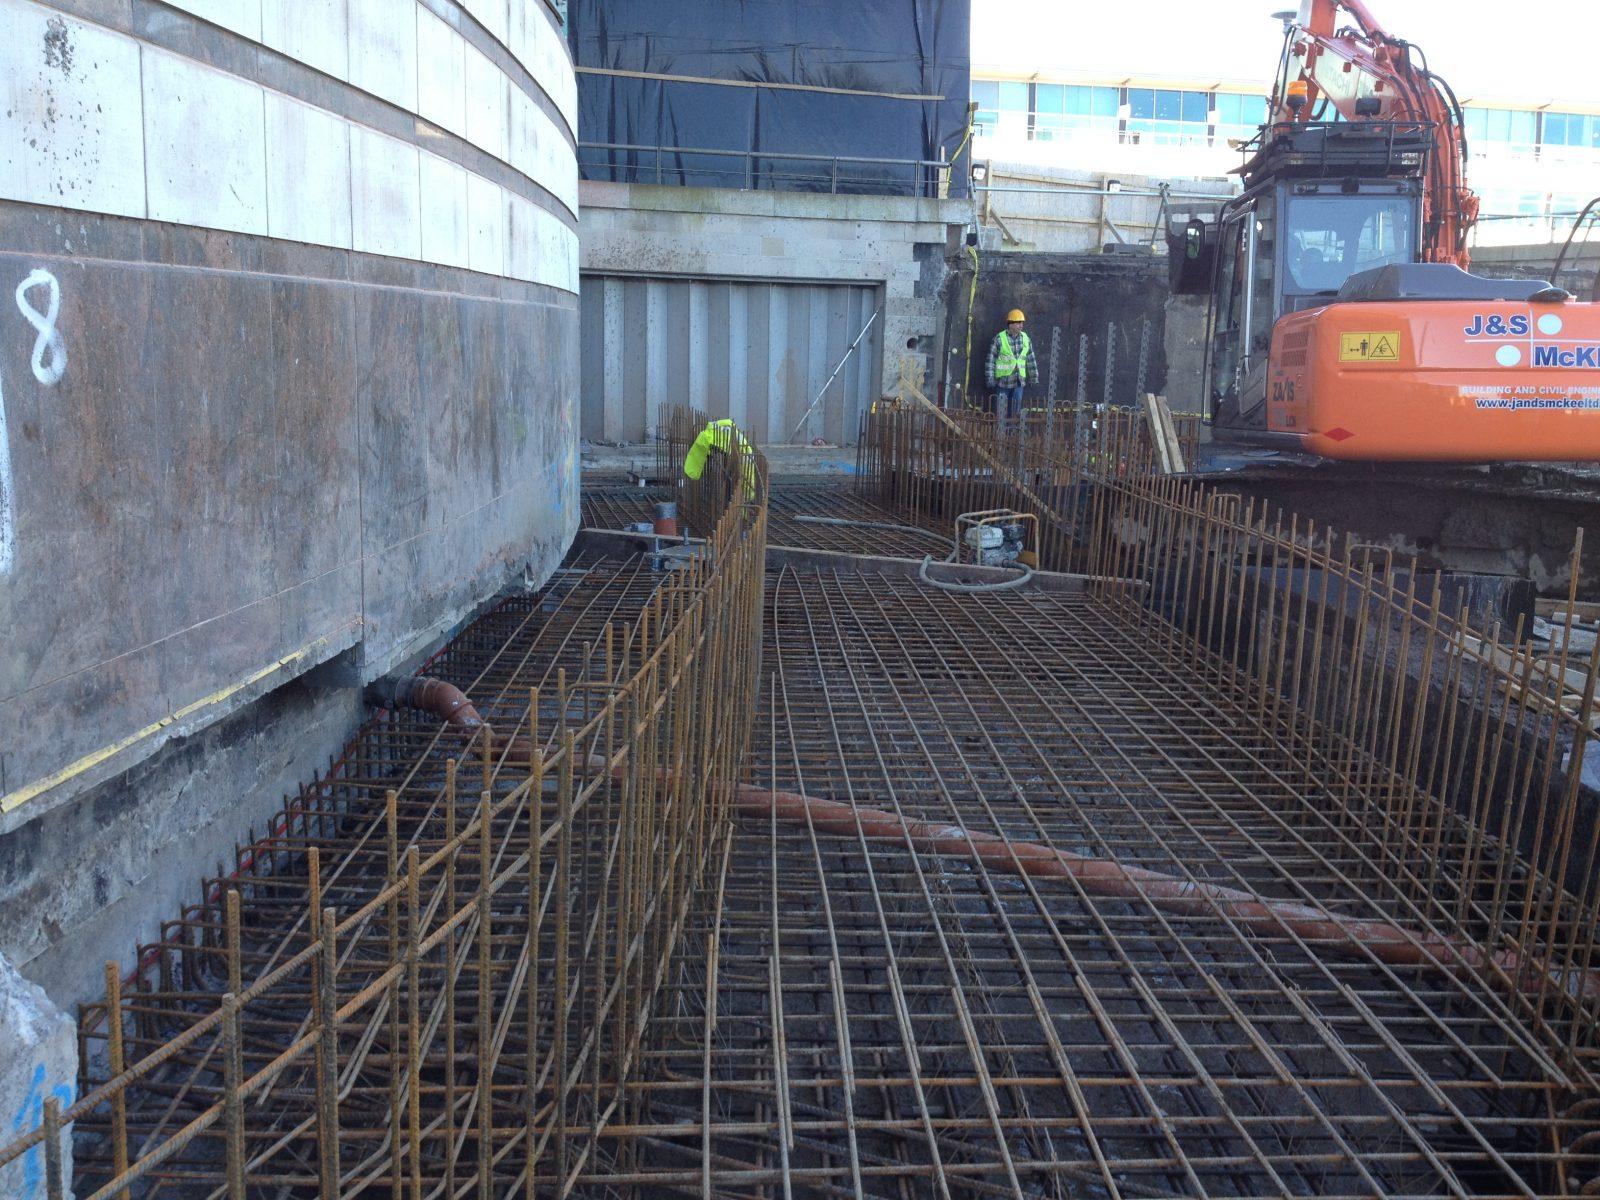 Steel work for reinforced concrete